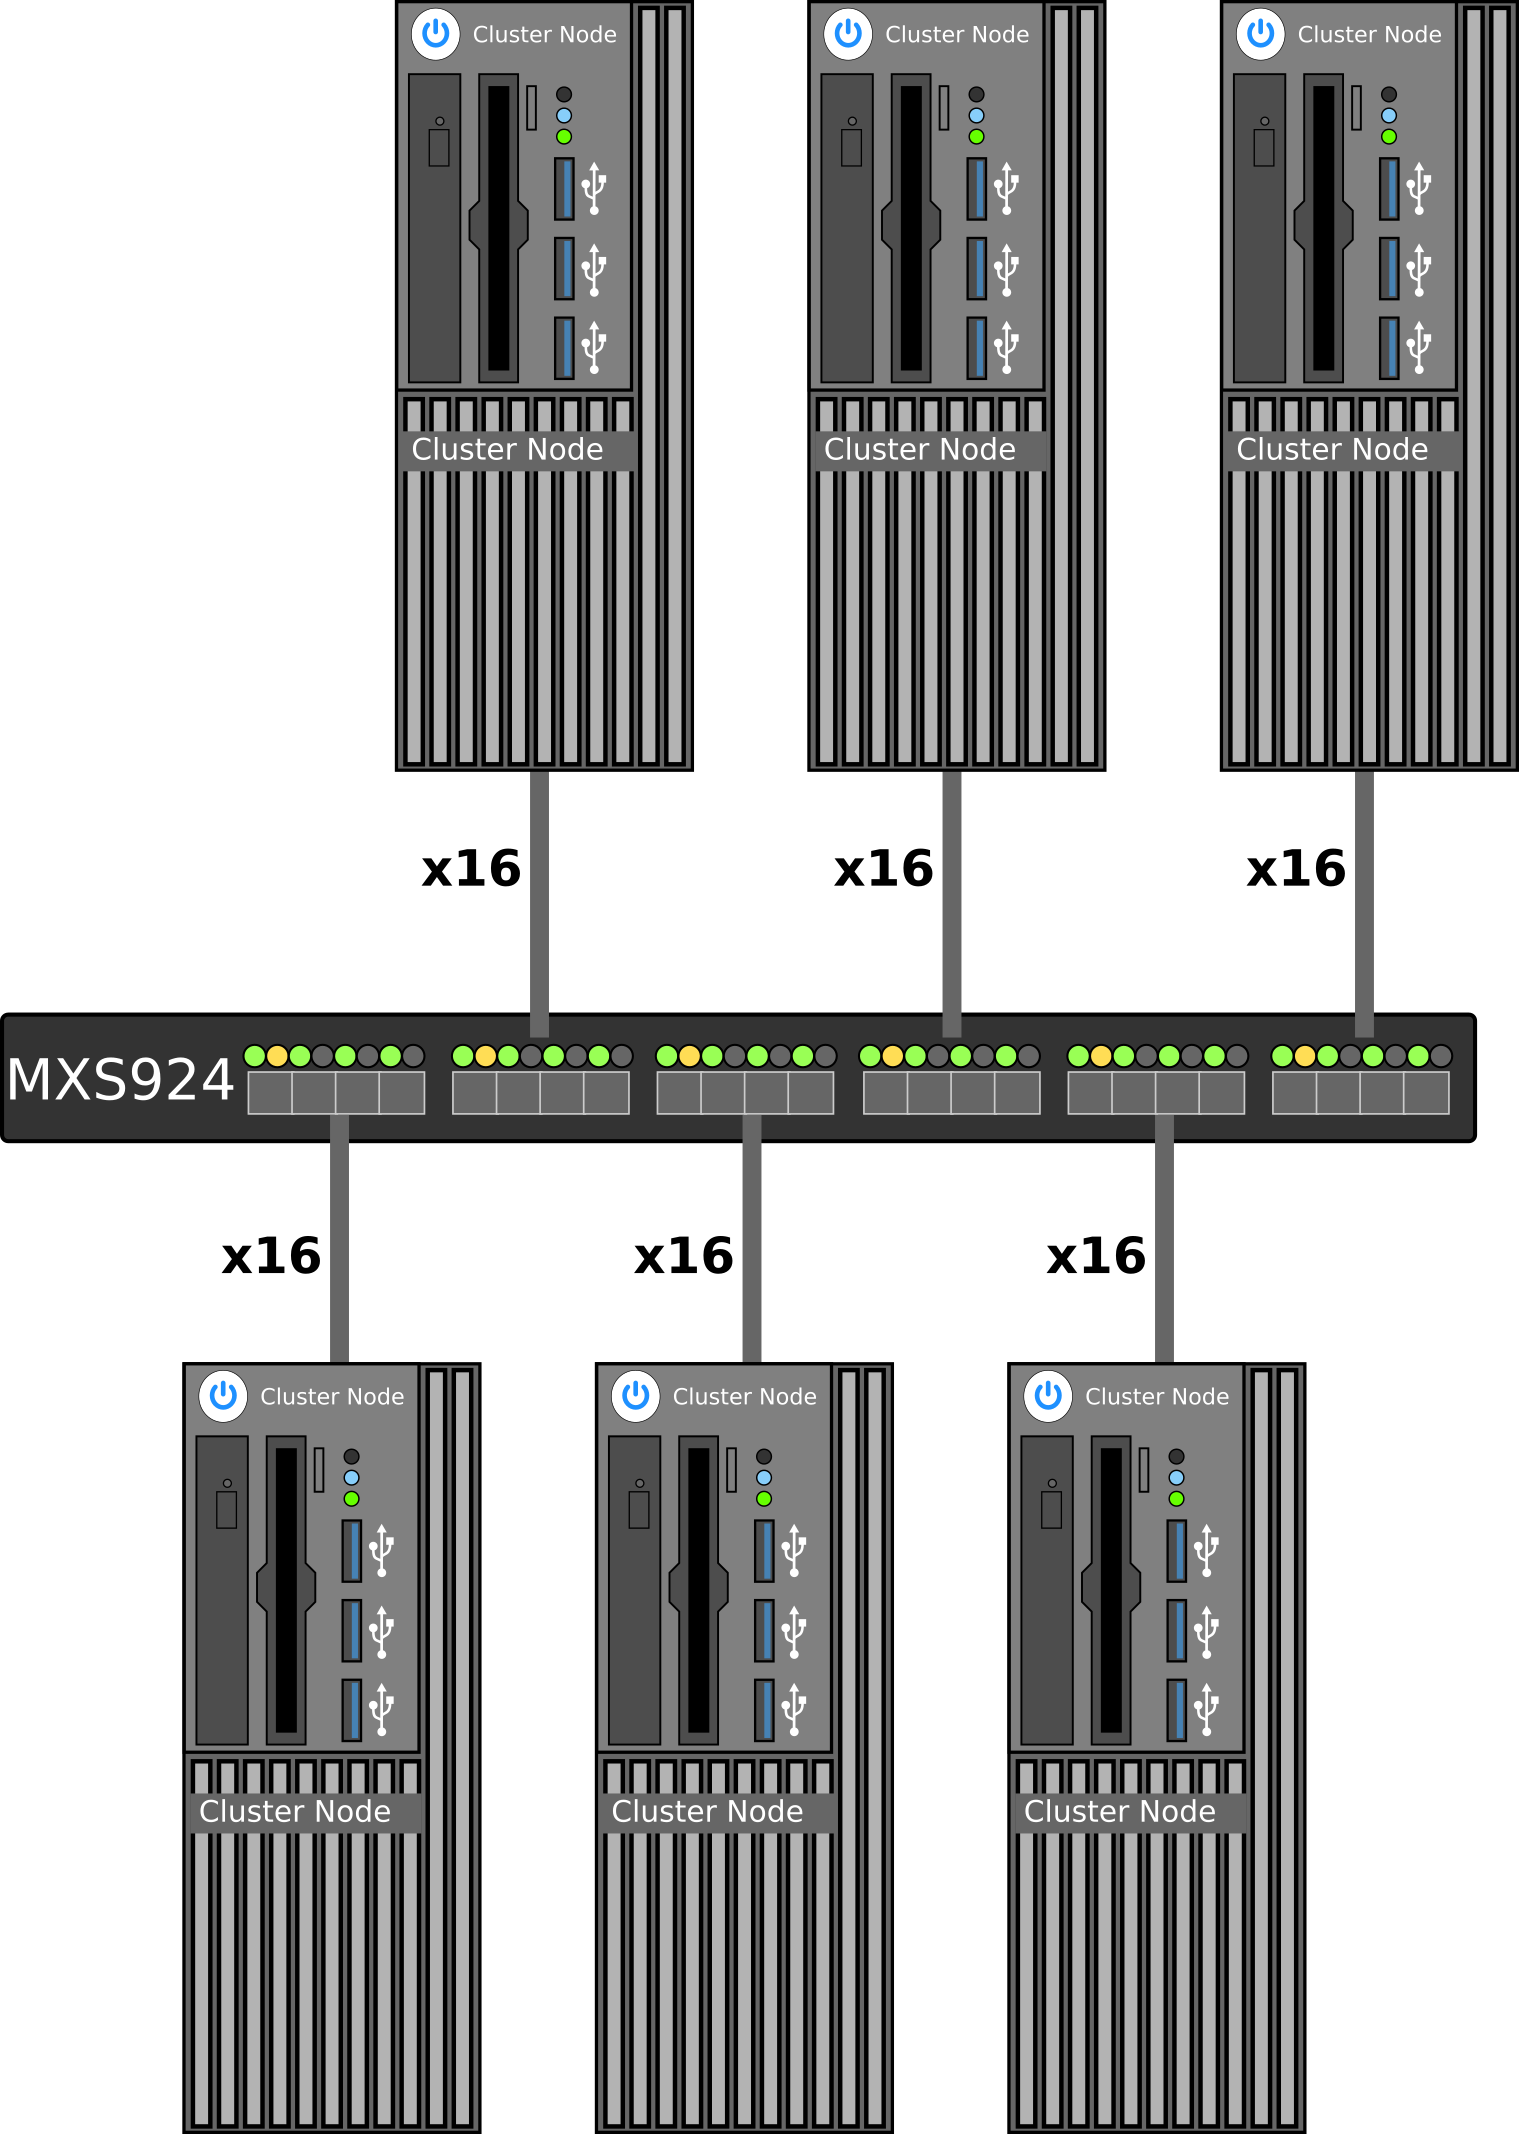 MXS524 PCI Express switch 6 node configuration